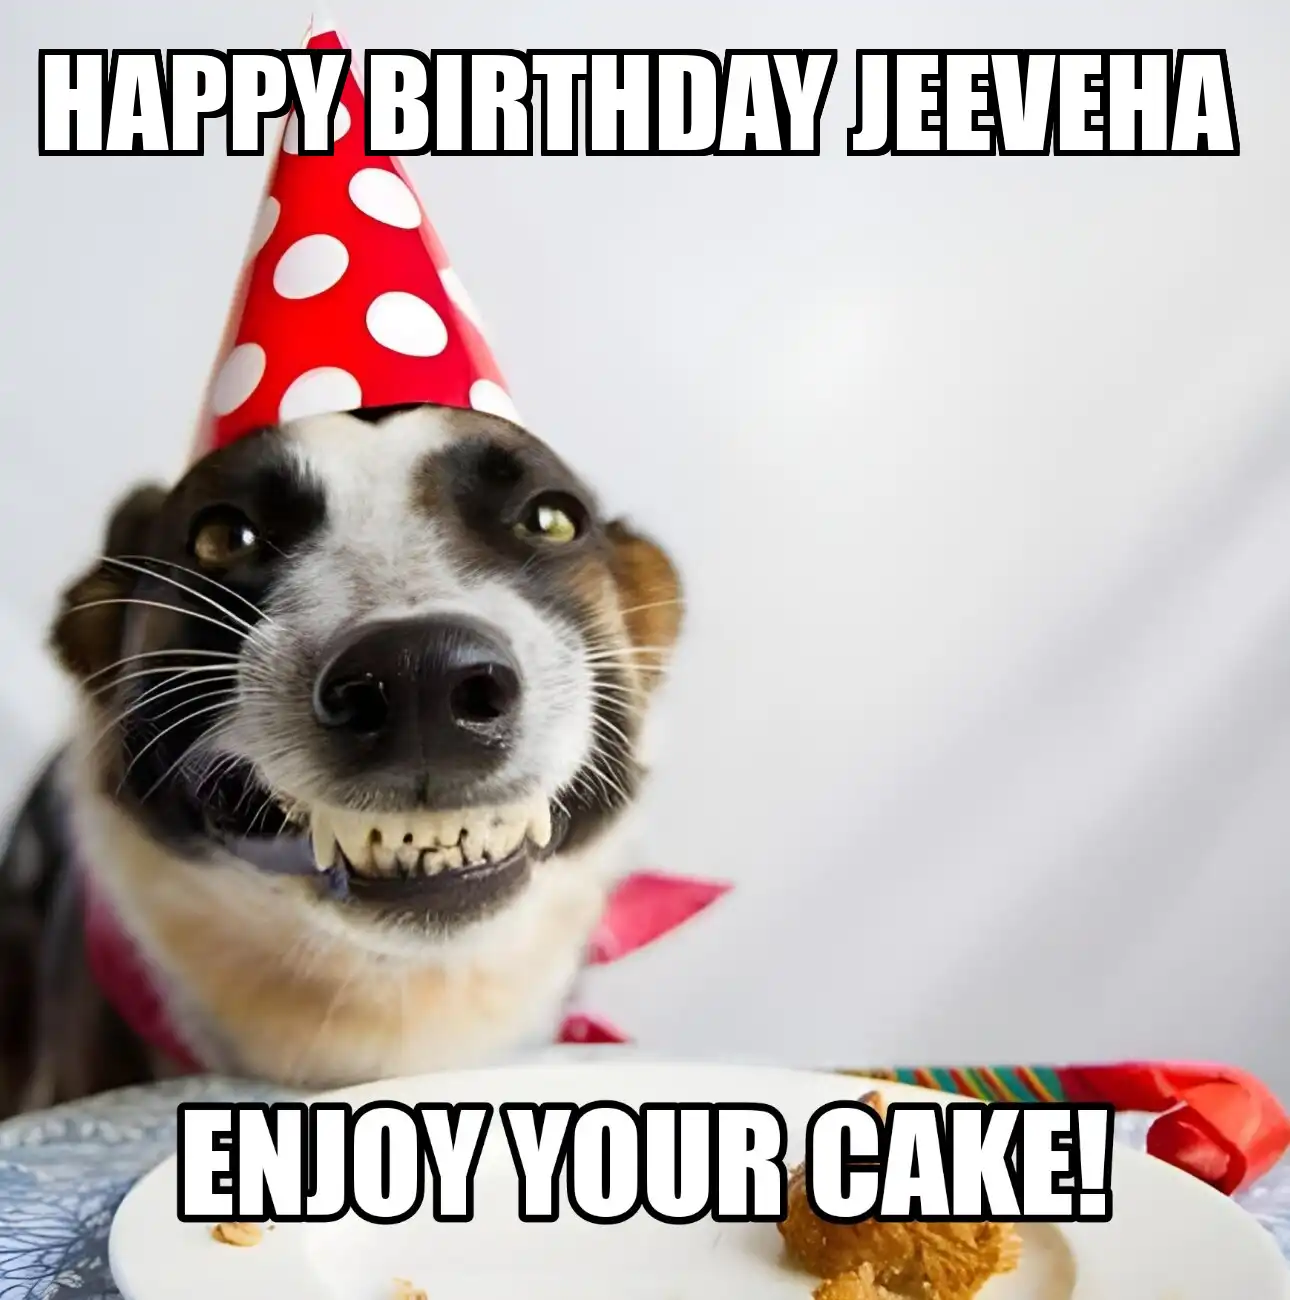 Happy Birthday Jeeveha Enjoy Your Cake Dog Meme